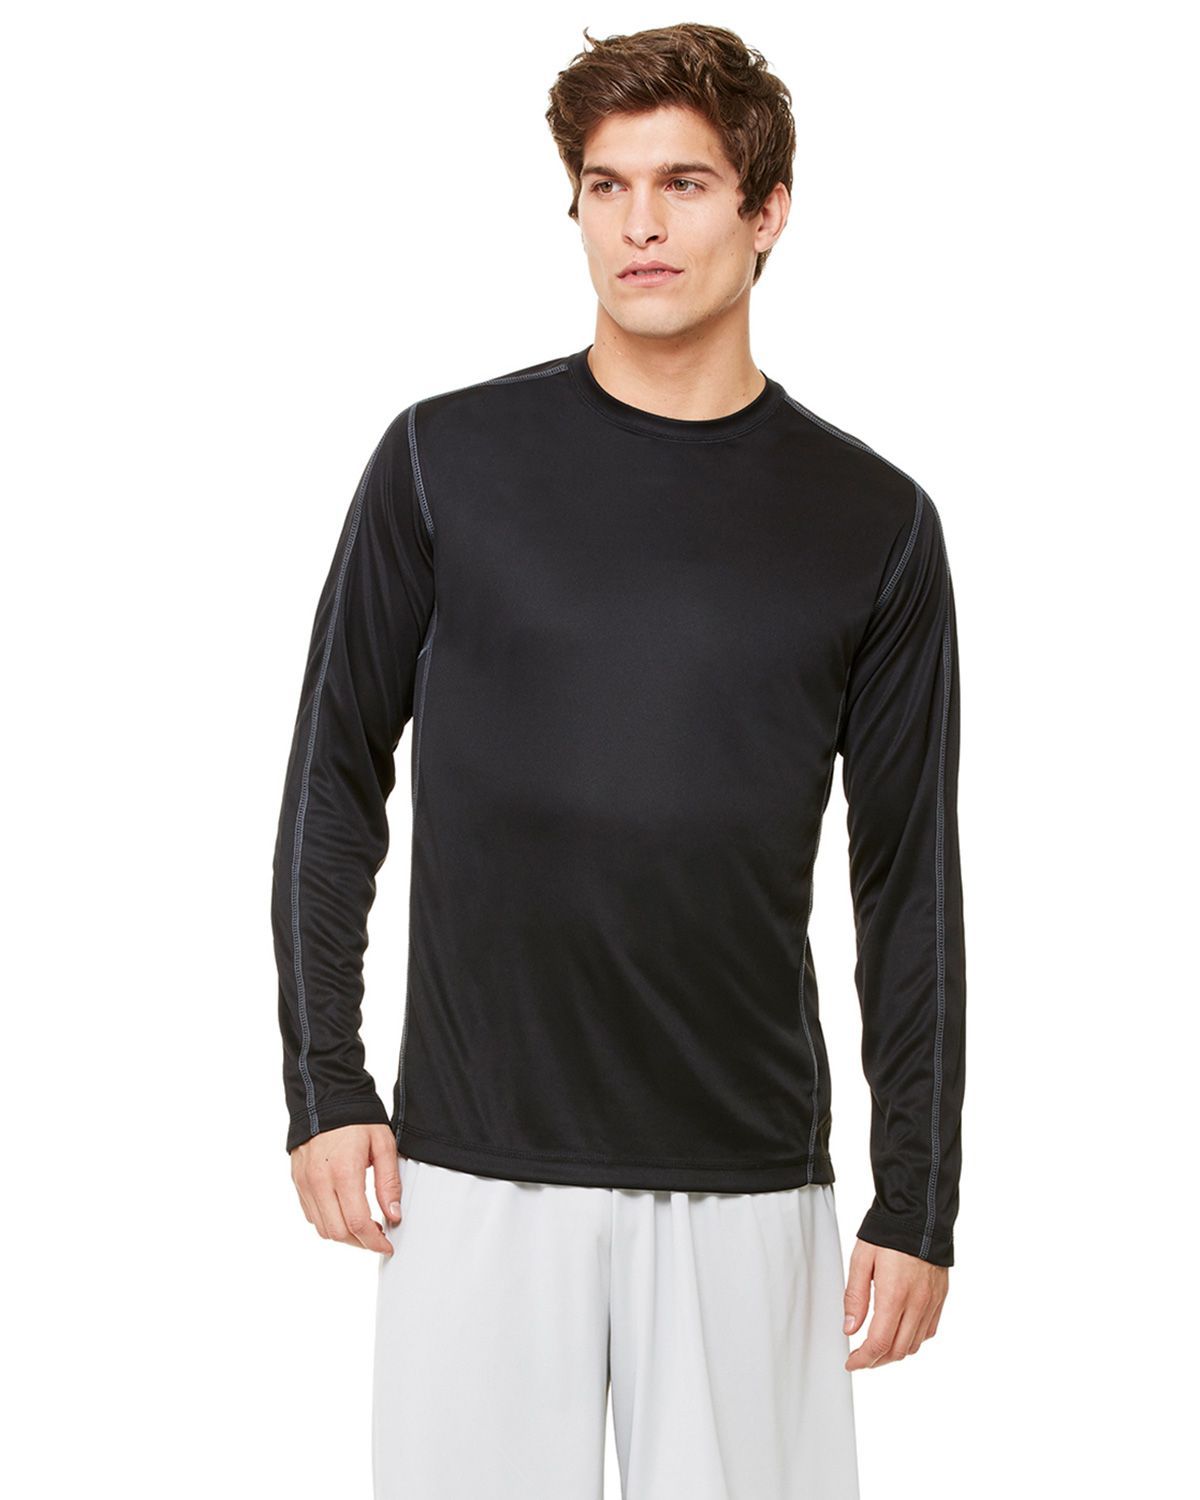 All Sport M3021 Men’s 4.1 oz. Long-Sleeve Edge T-Shirt